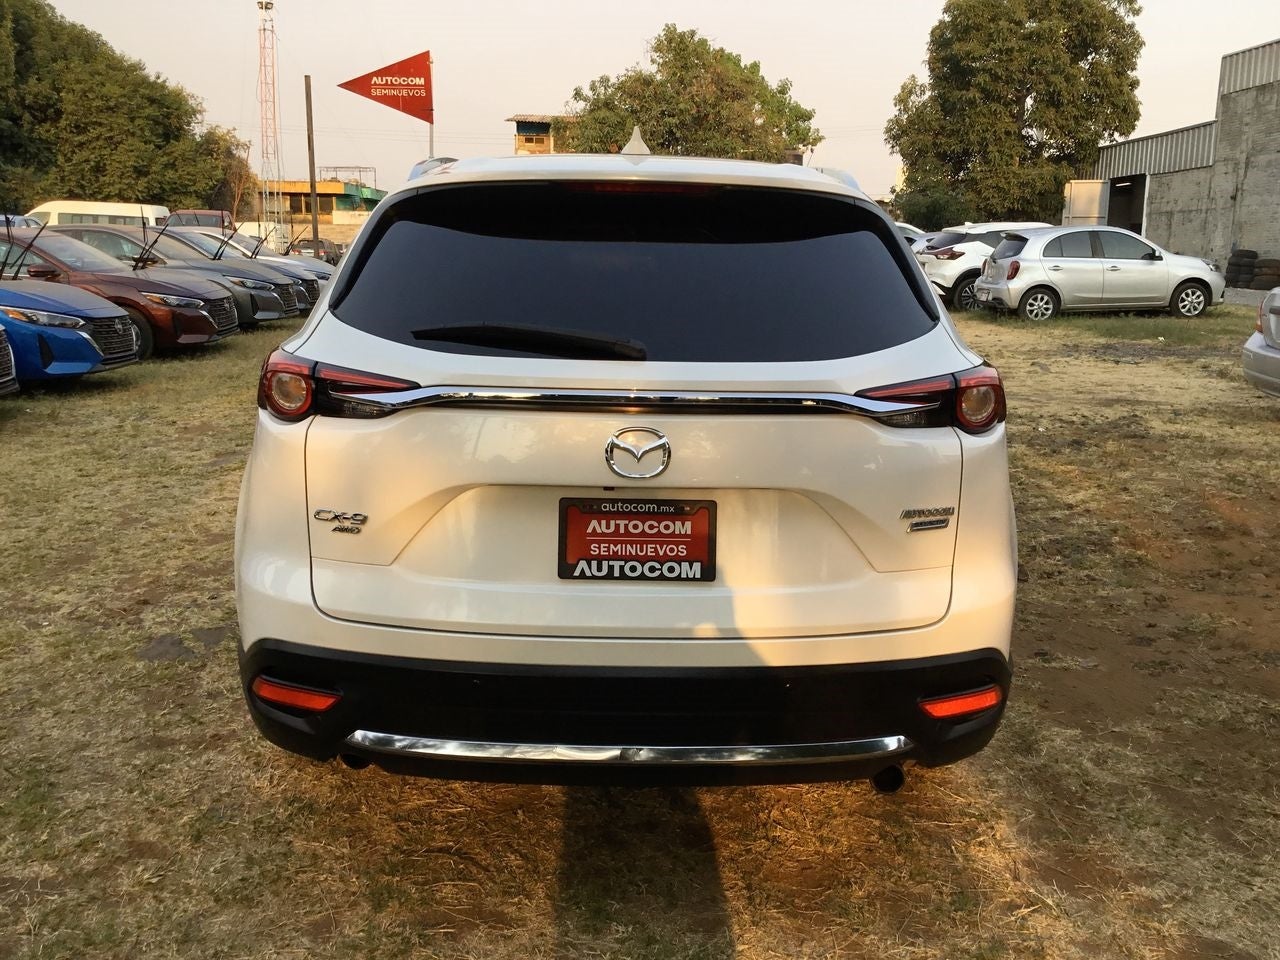 2018 Mazda Mazda CX-9 I GRAND TOURING AWD